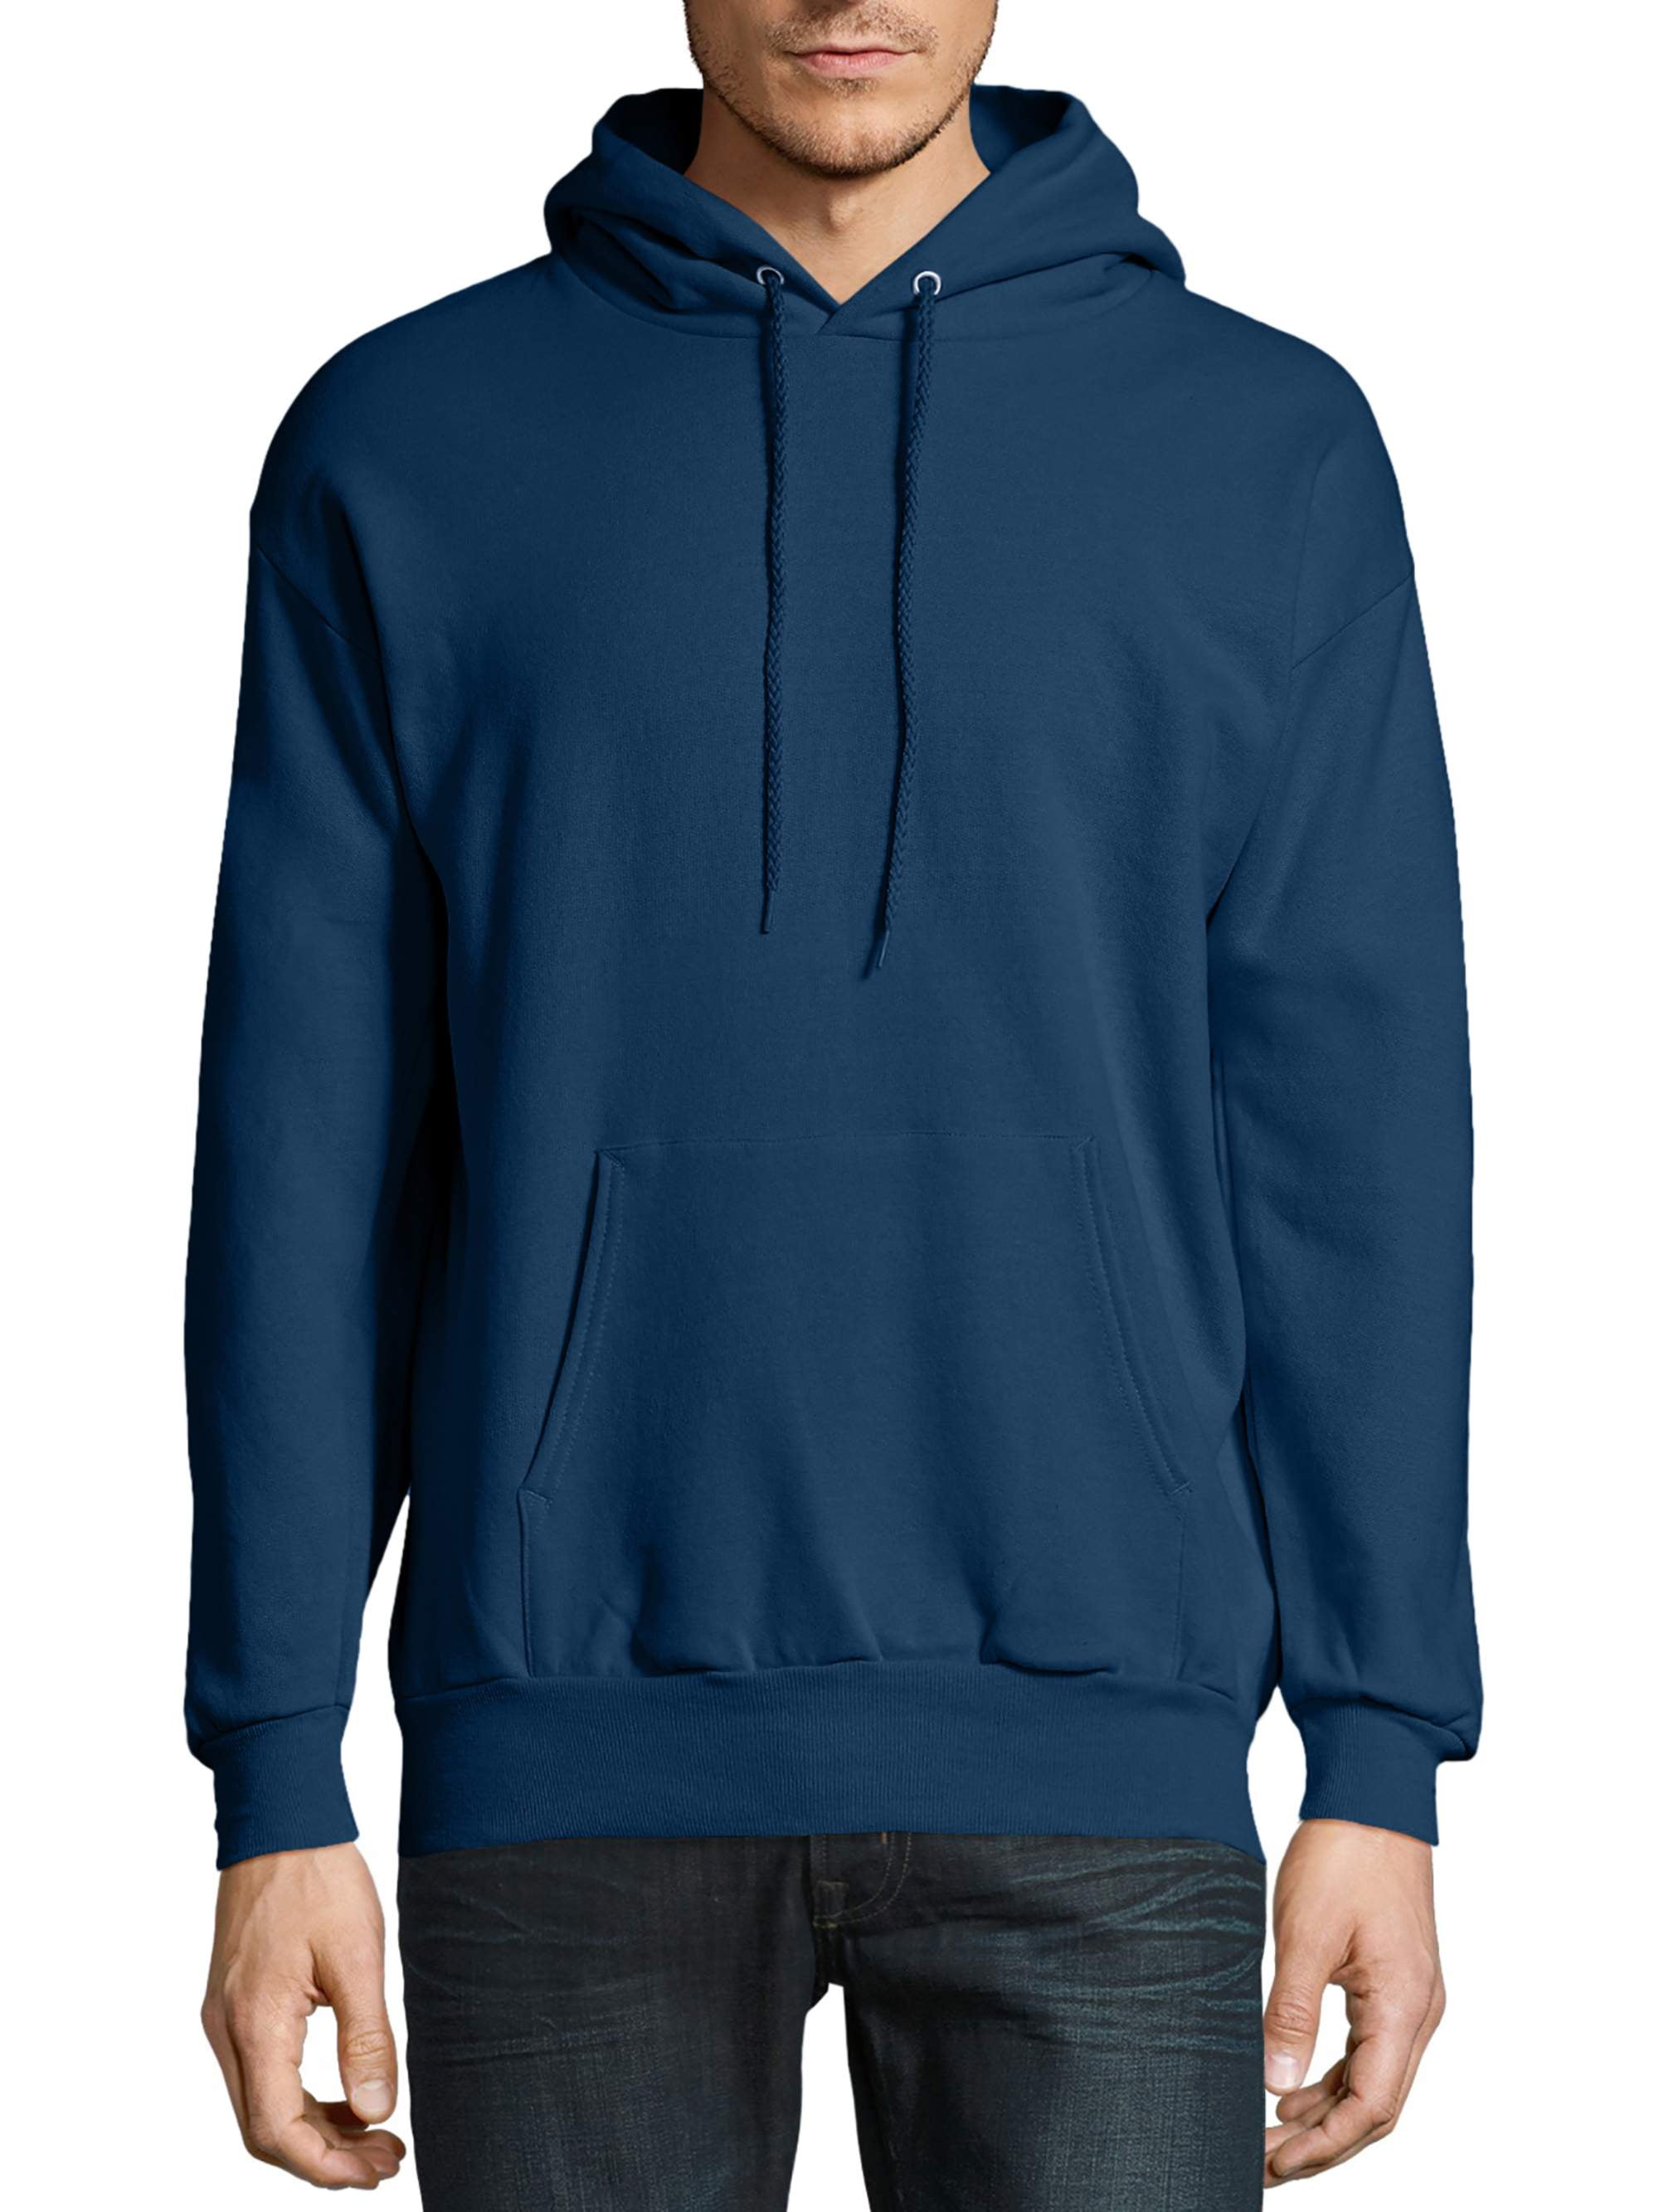 Men's Hoodie with Pockets Track Tops Unisex Sweatshirts Jumper Sweat Pullover 